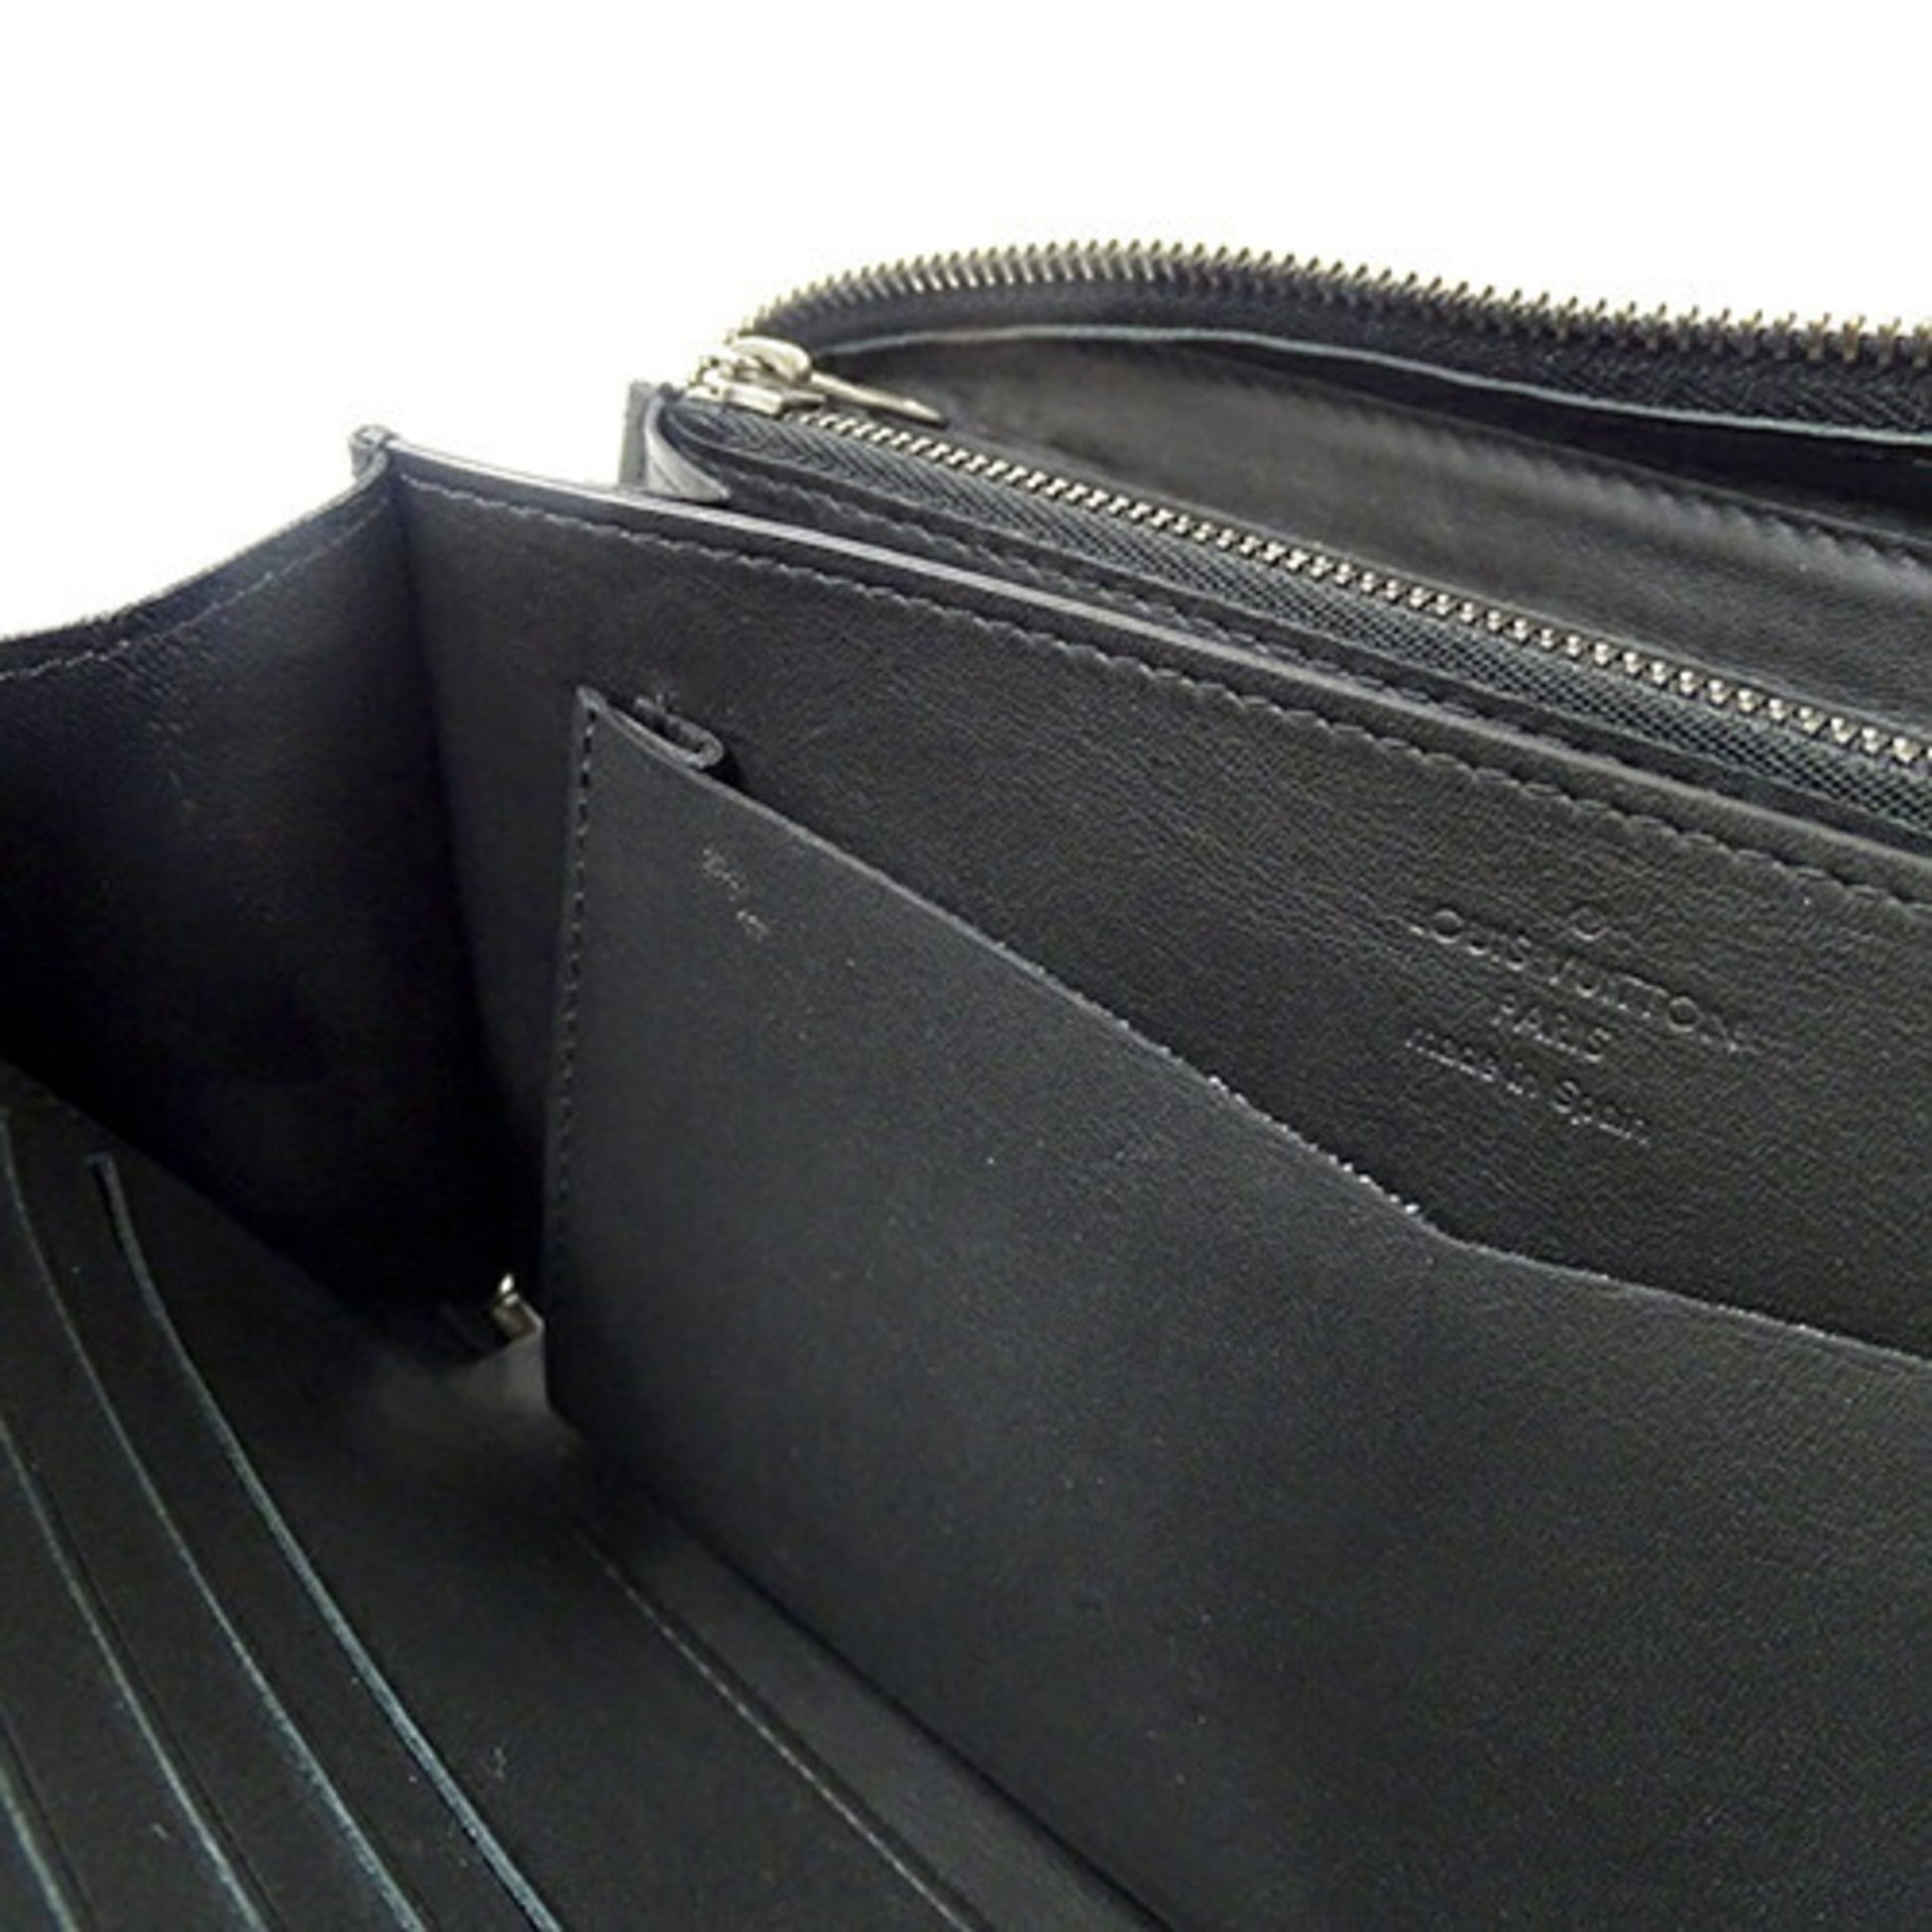 Pre-Owned Louis Vuitton Damier Infini Zippy XL Wallet N61254 Men's